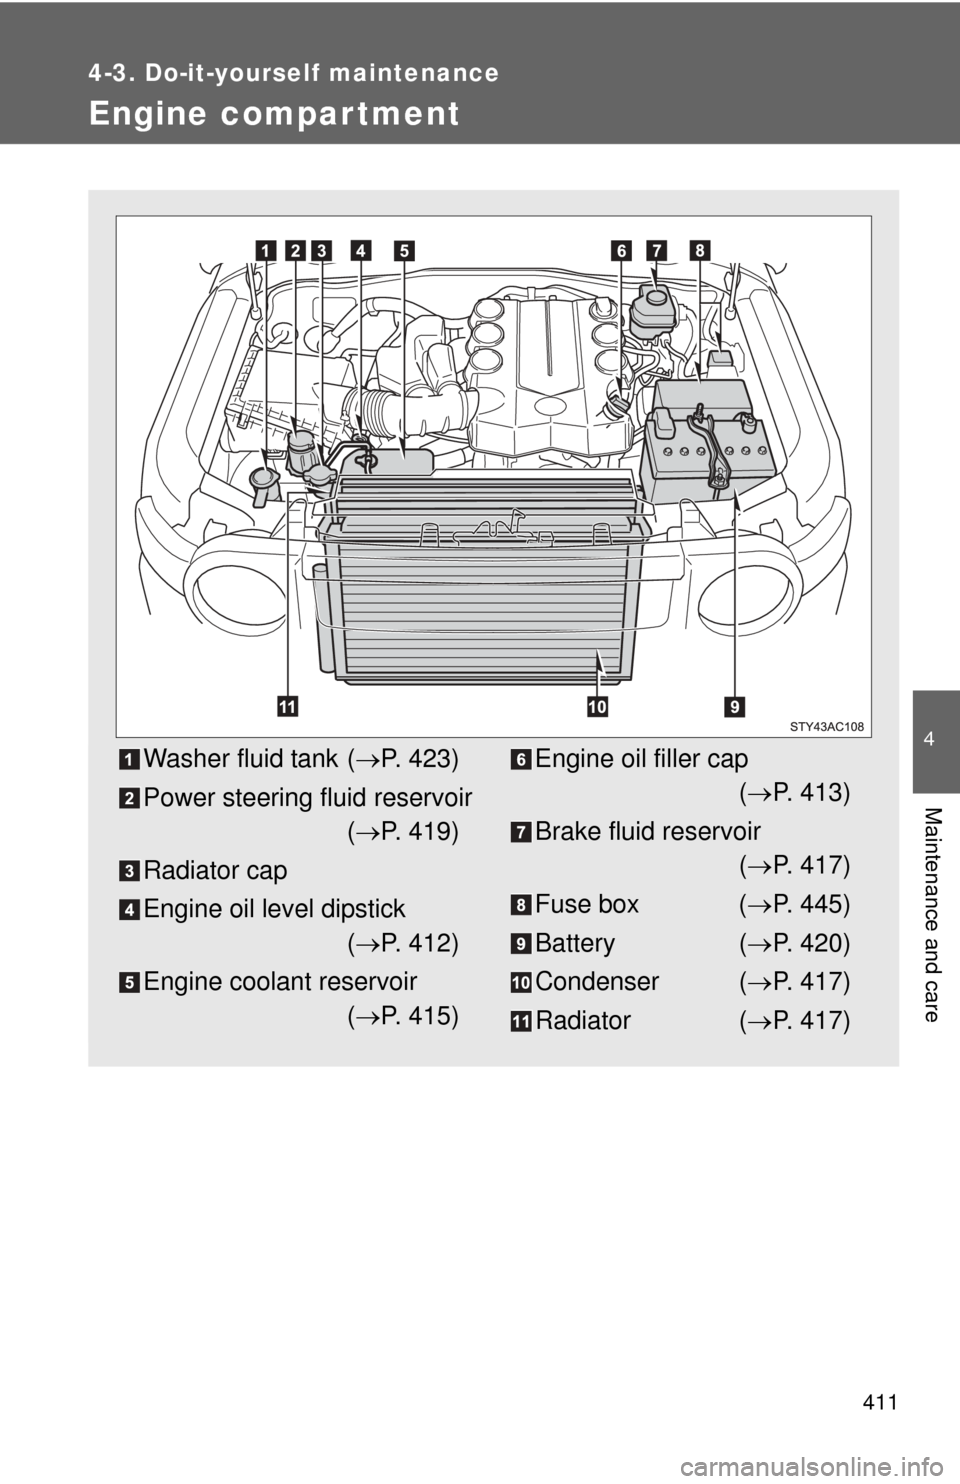 TOYOTA FJ CRUISER 2014 1.G Owners Manual 411
4-3. Do-it-yourself maintenance
4
Maintenance and care
Engine compar tment
Washer fluid tank (P. 423)
Power steering fluid reservoir ( P. 419)
Radiator cap
Engine oil level dipstick ( P. 